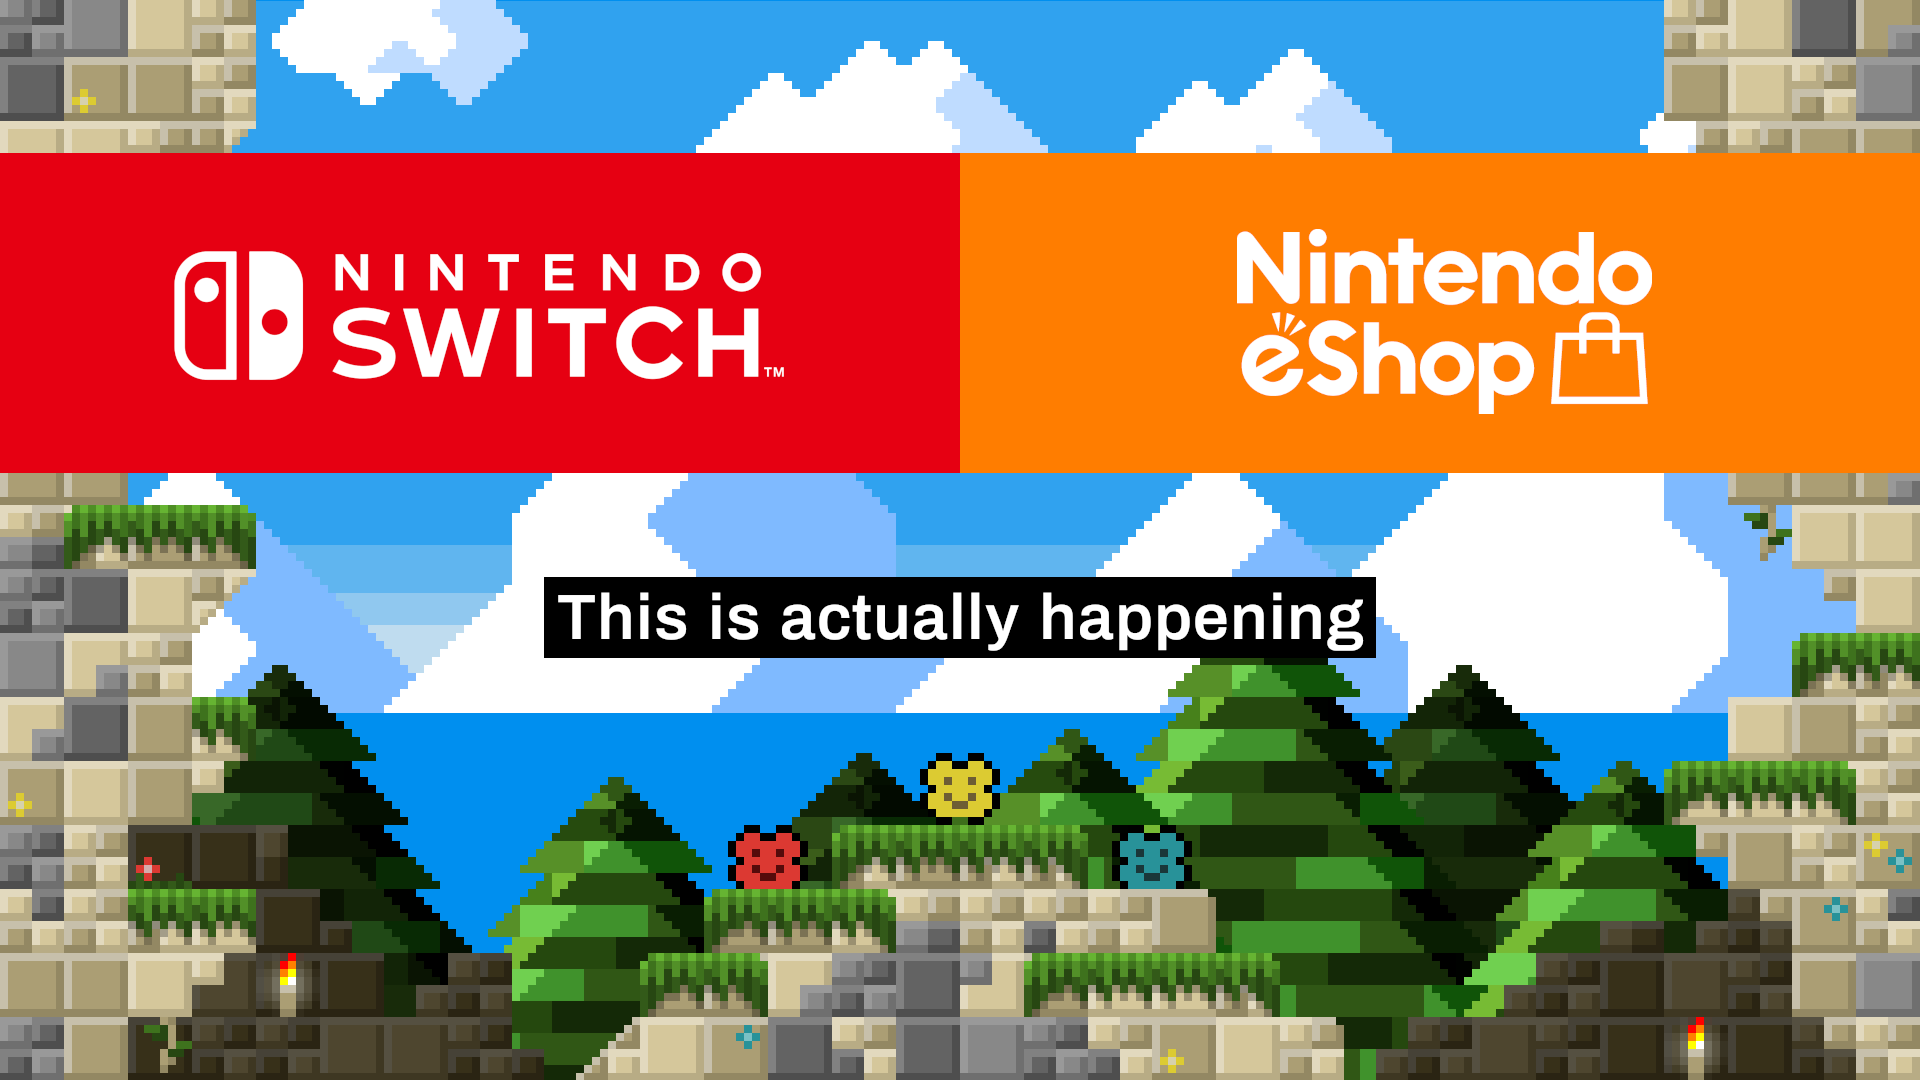 Nintendo Switch is a trademark of Nintendo.